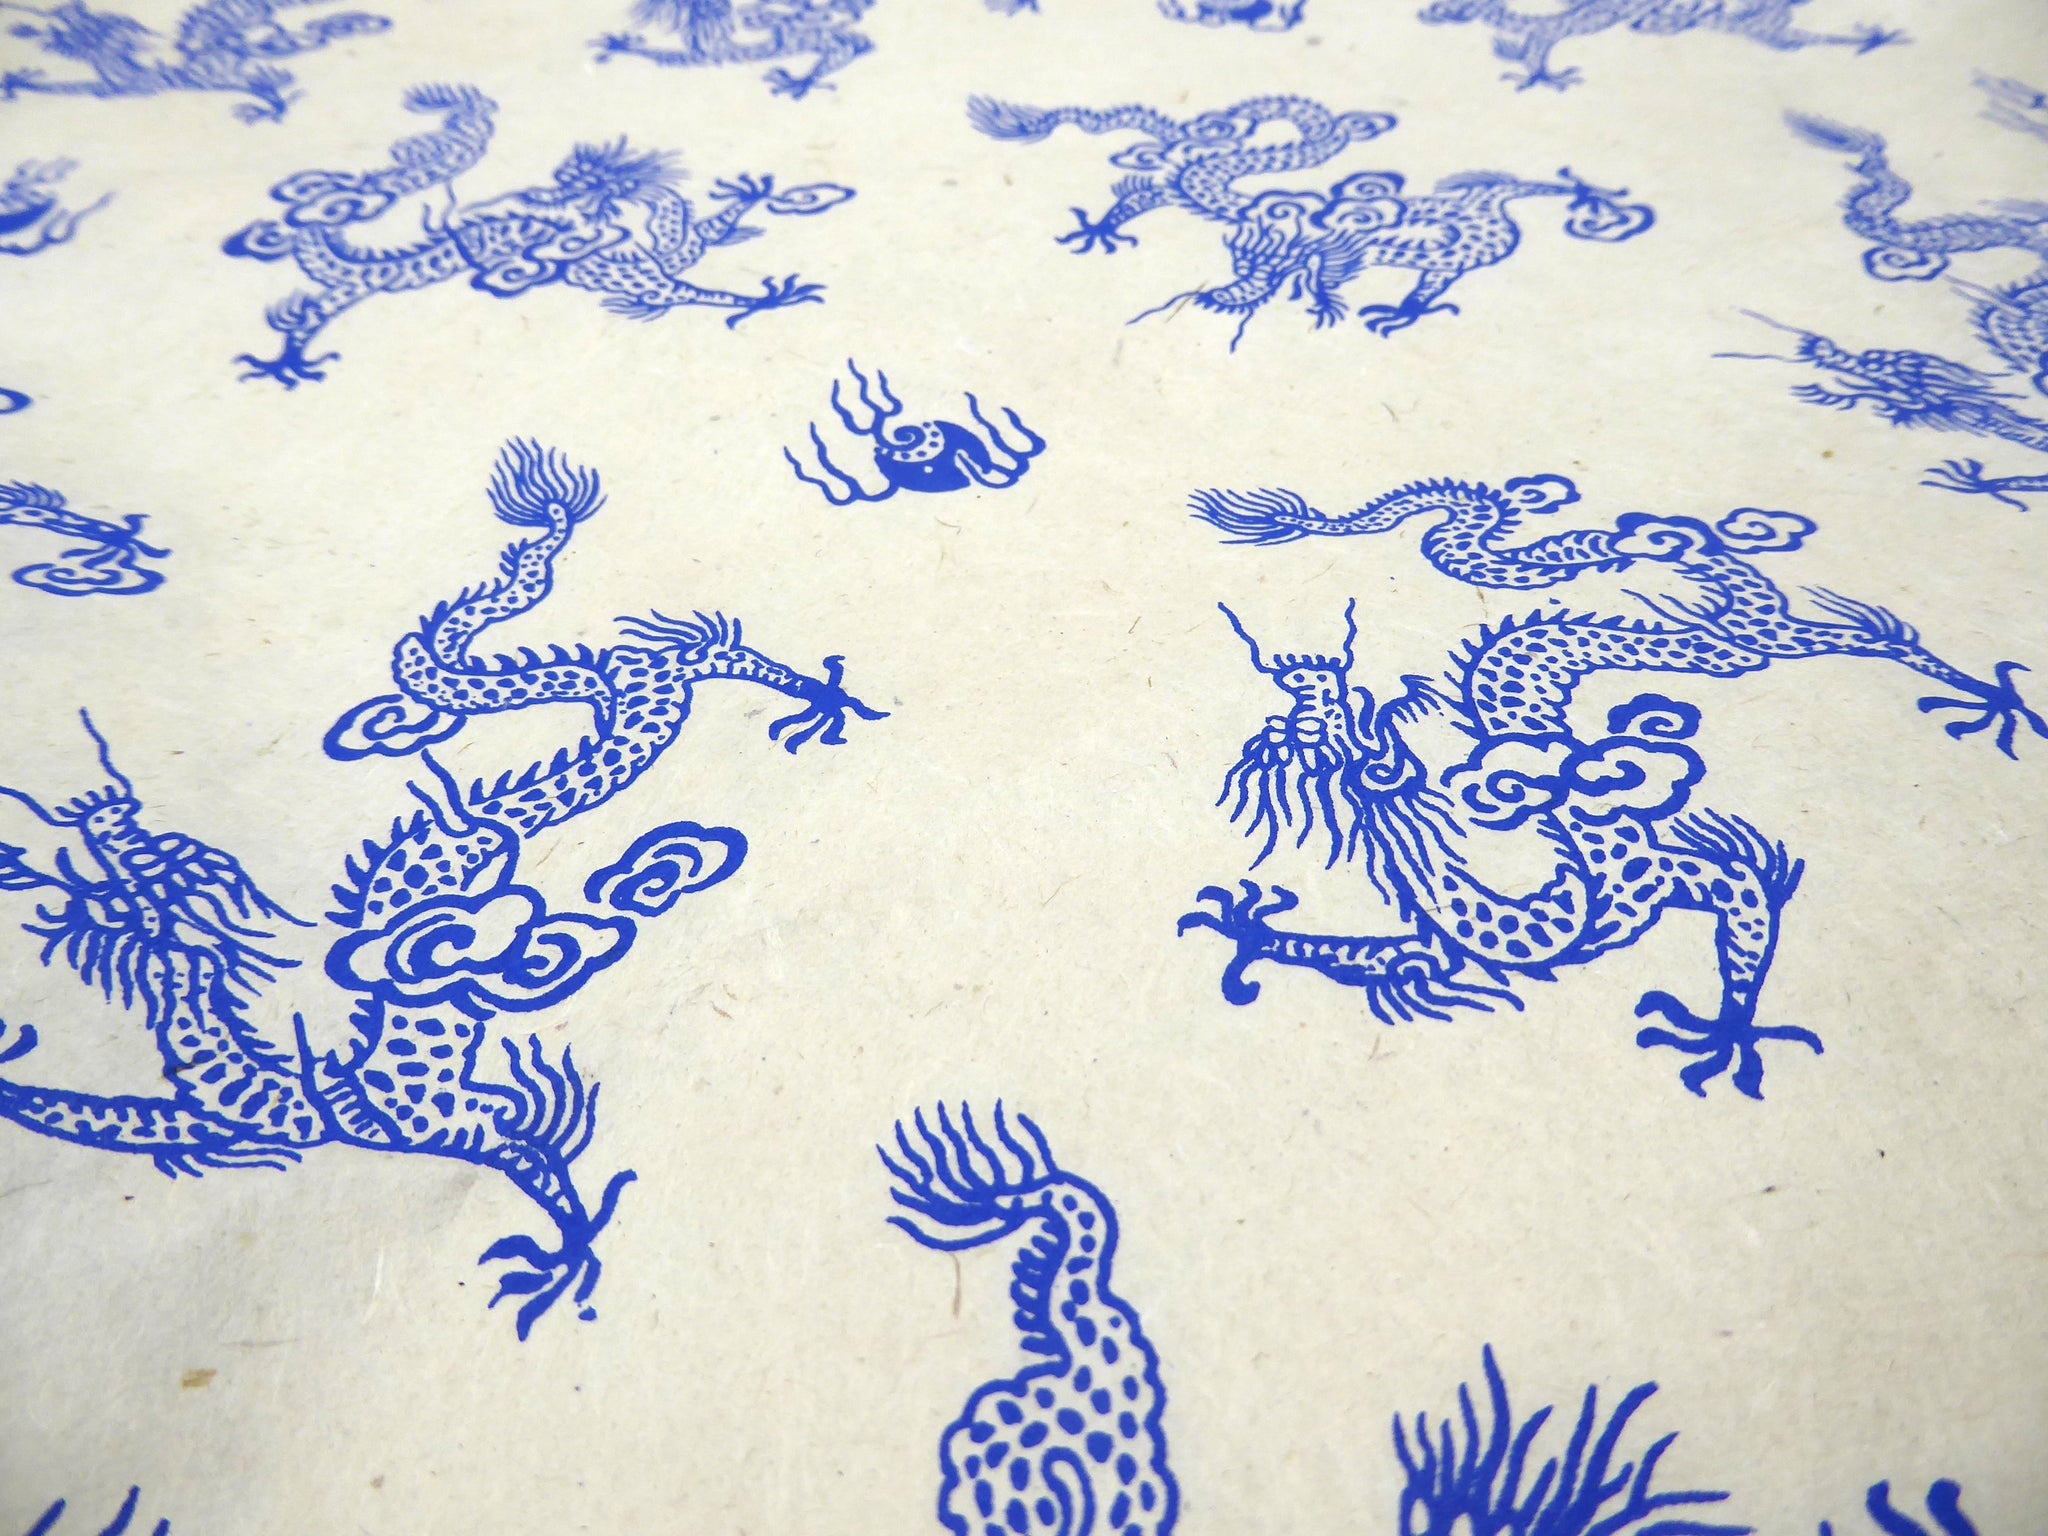 Blue Dragons Print on Lokta Paper, Tree Free & Sustainable